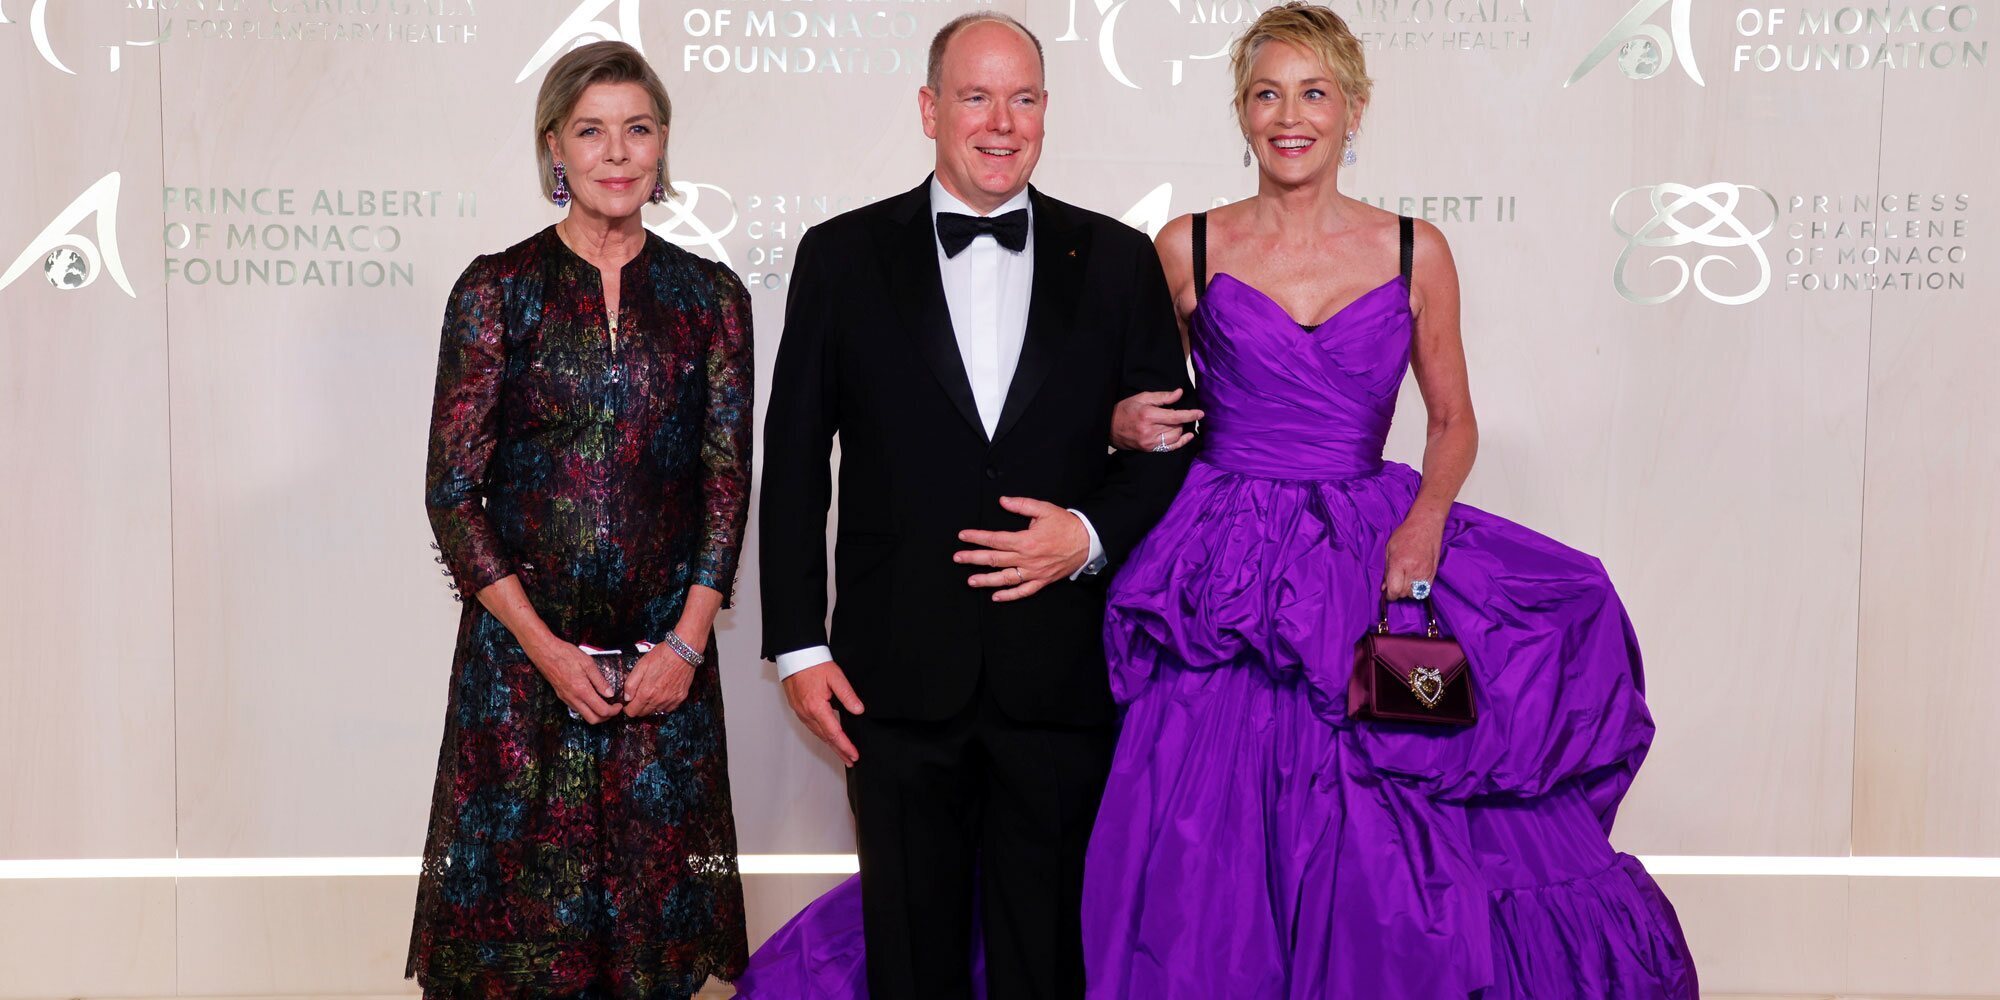 La Familia Real de Mónaco celebra la Gala por la Salud Planetaria arropada por Sharon Stone y Orlando Bloom